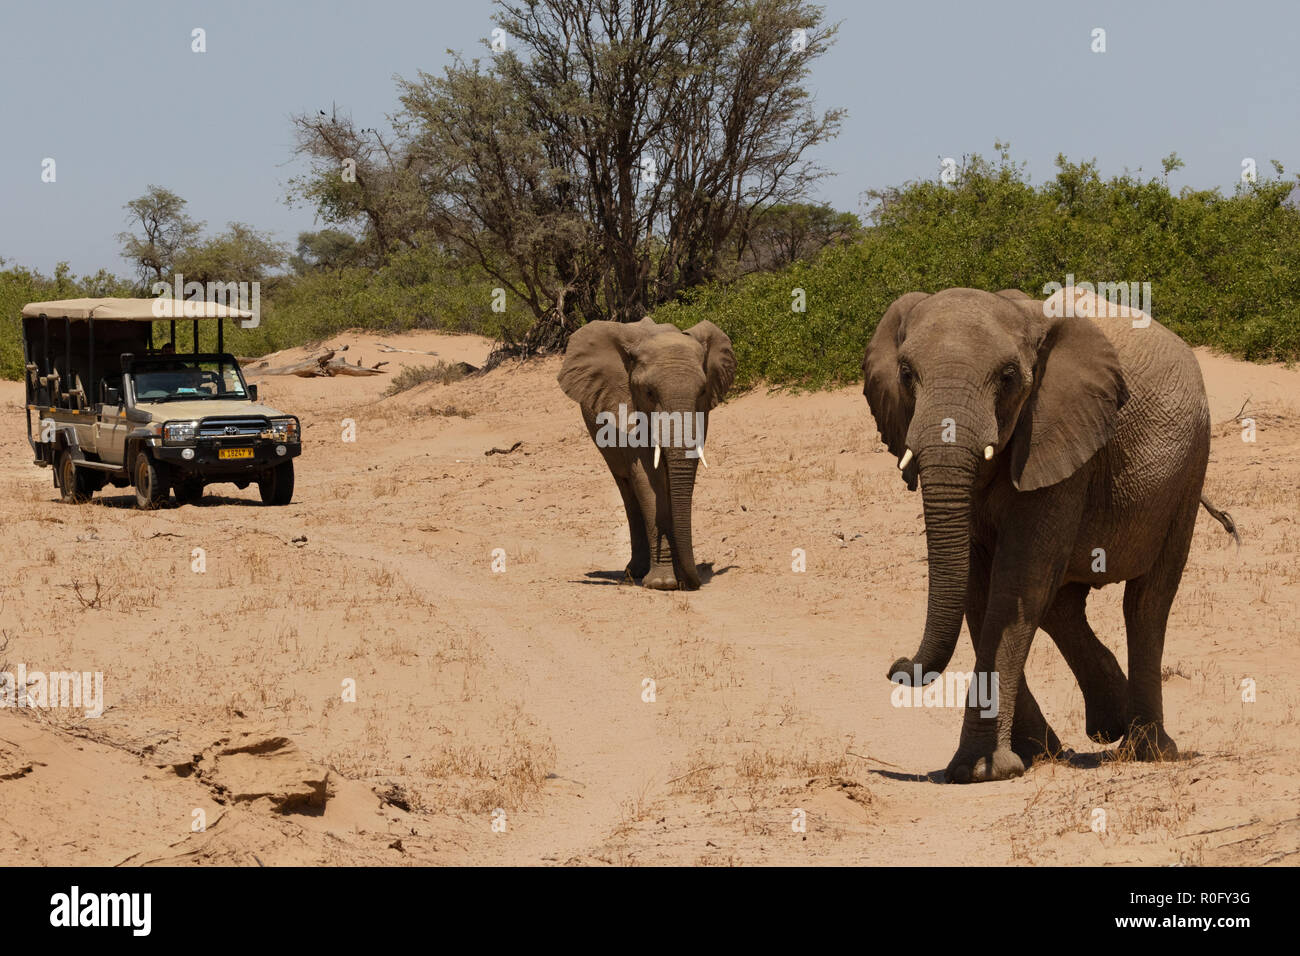 Namibia safari - tourists on a jeep safari looking at desert elephants, Haub River bed, Damaraland, Namibia Africa Stock Photo